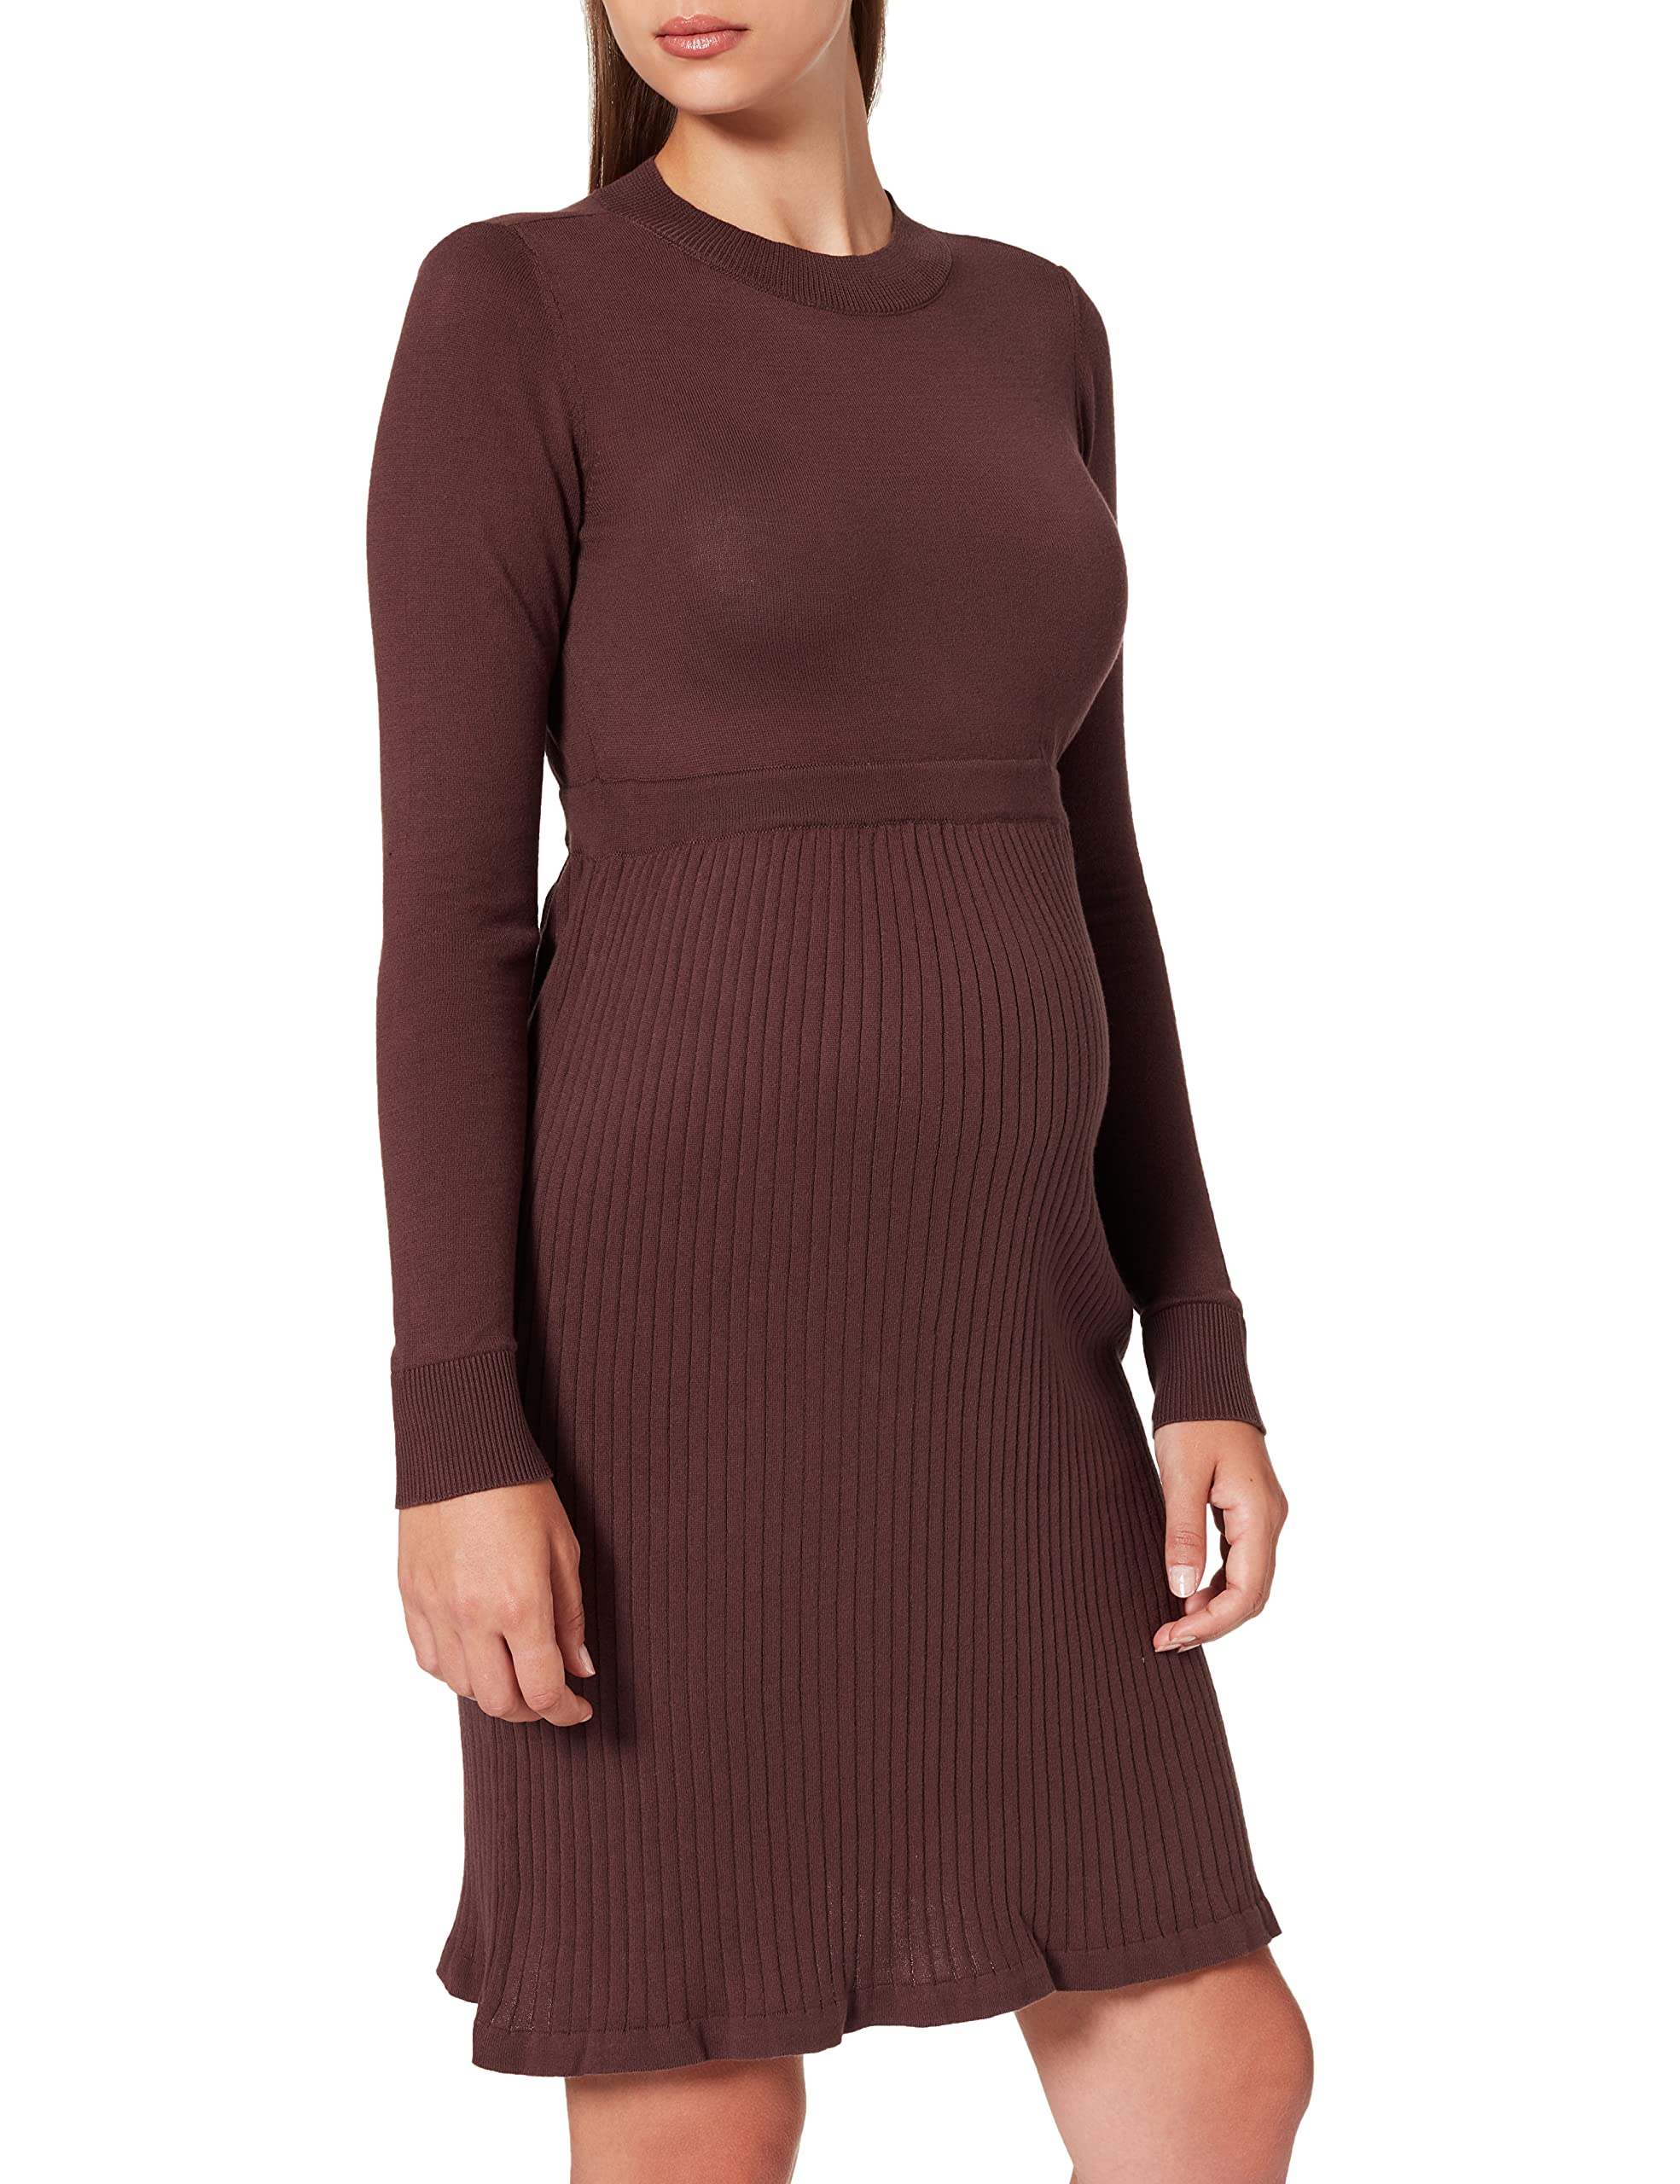 ESPRIT Maternity Damen Dress Knit Kleid, Coffee - 200, 44 EU